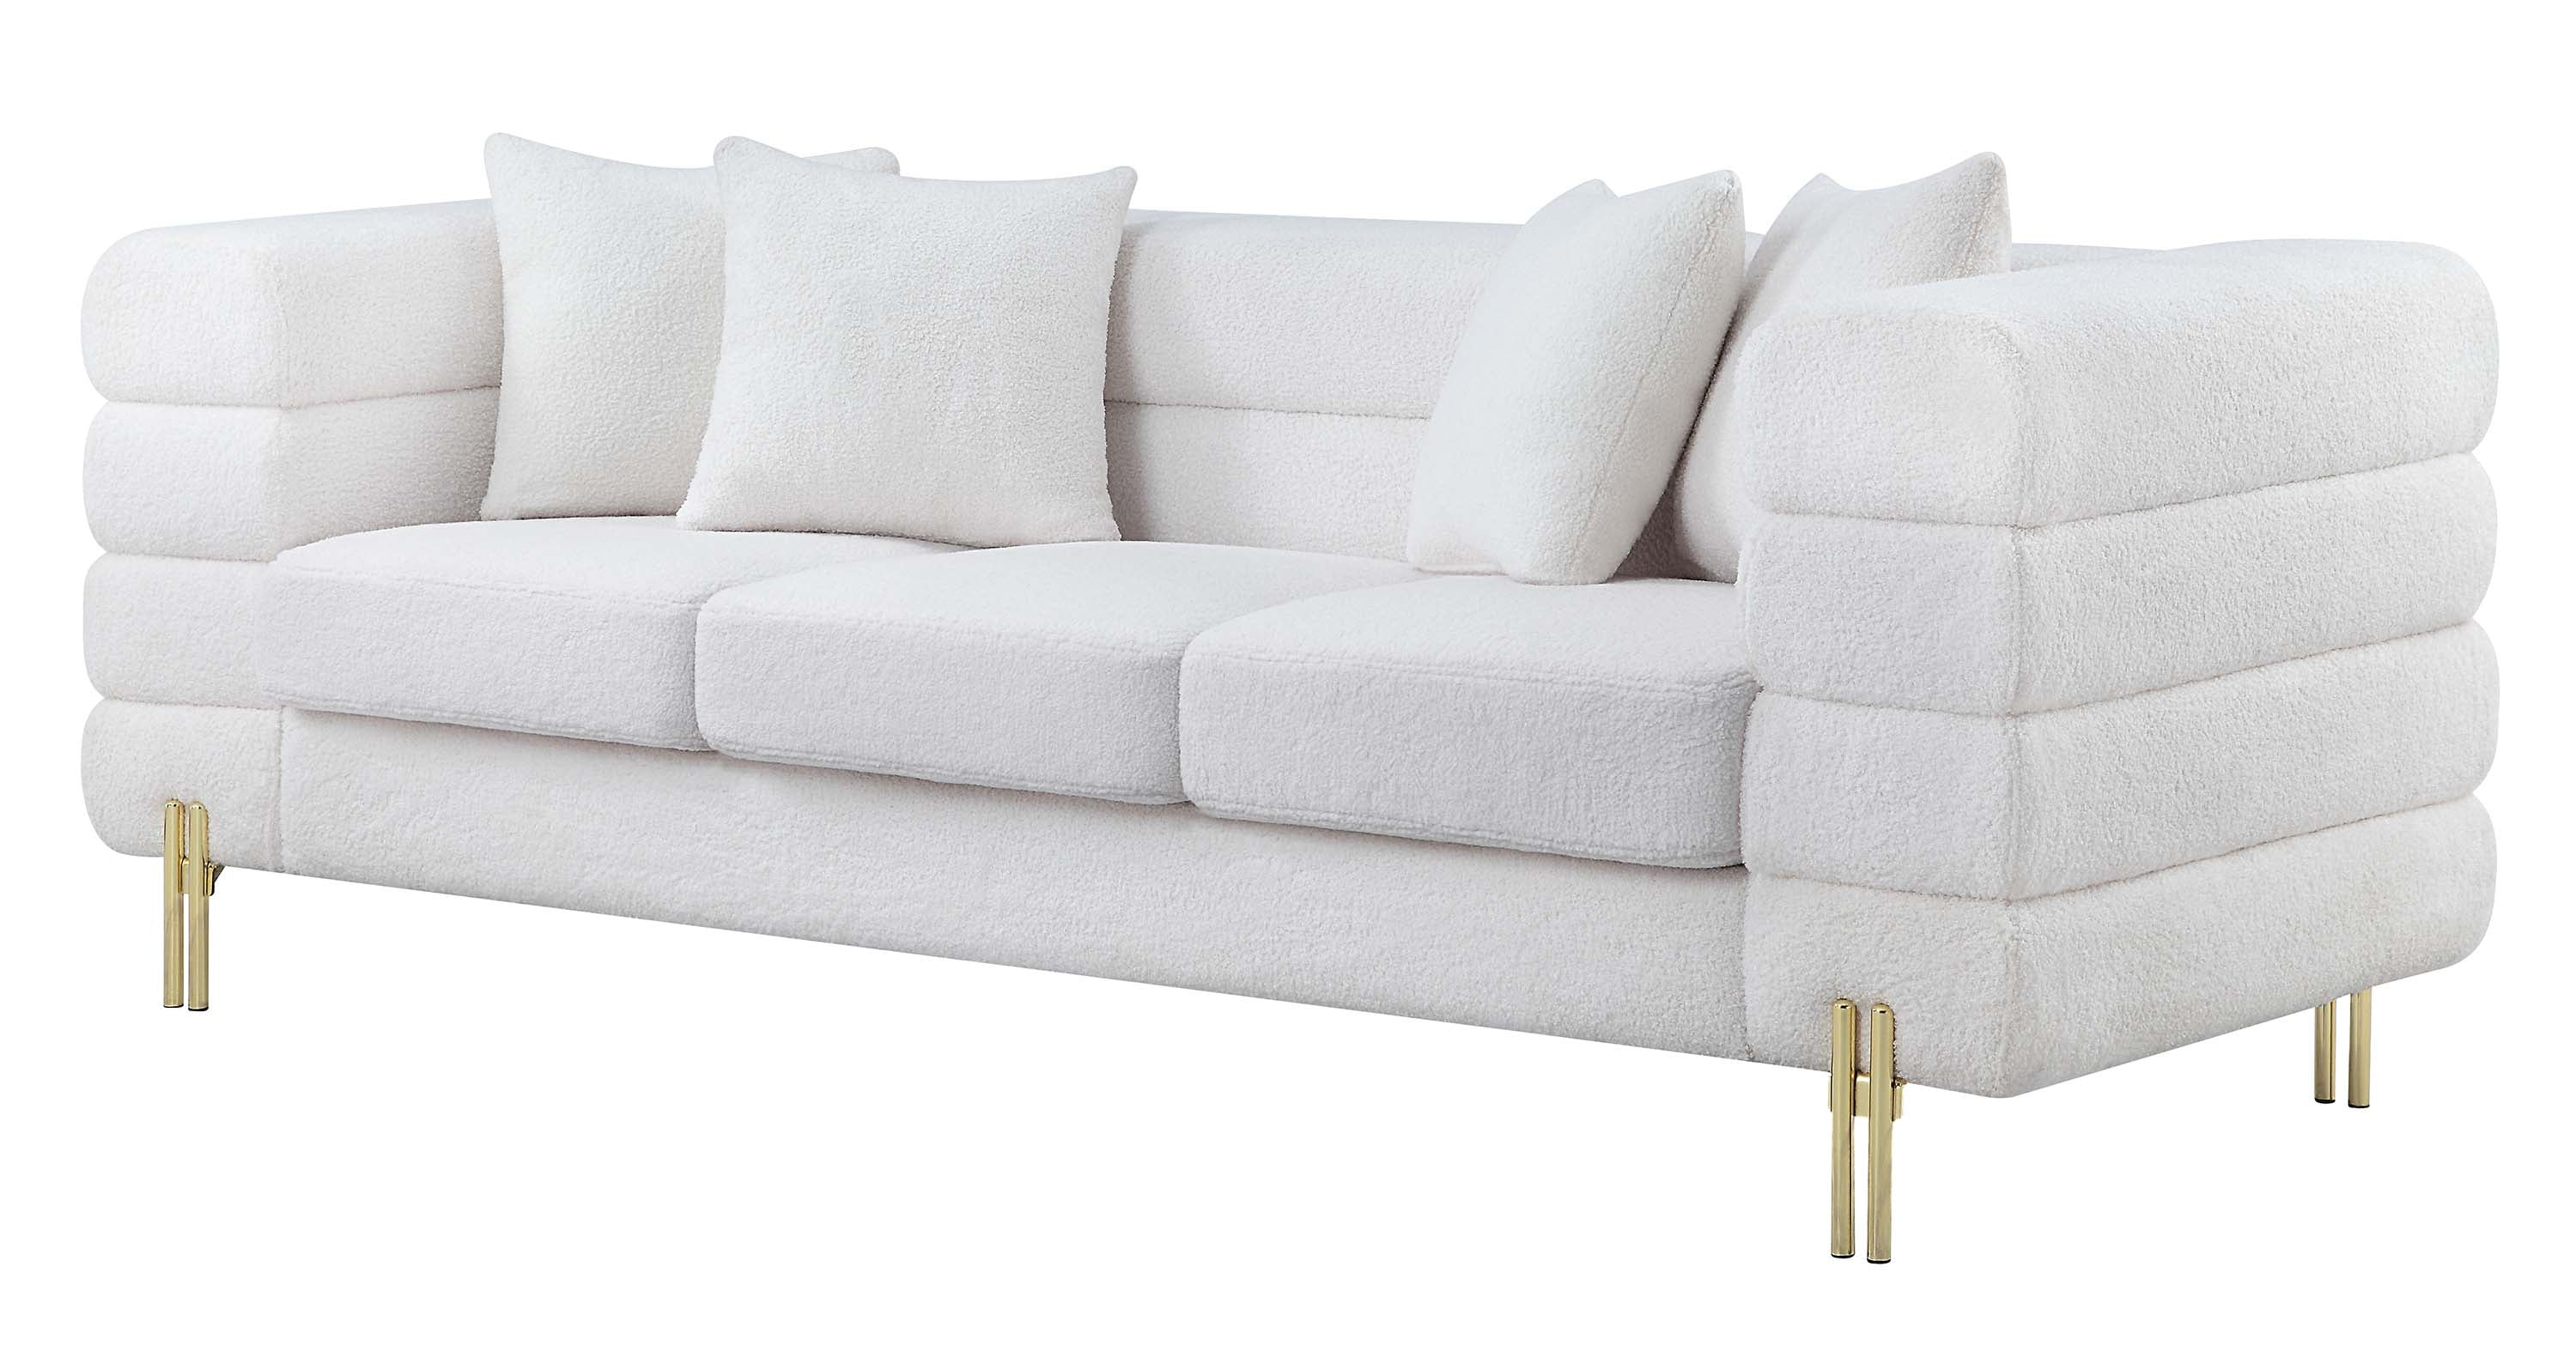 Bloomsbury Sofa White